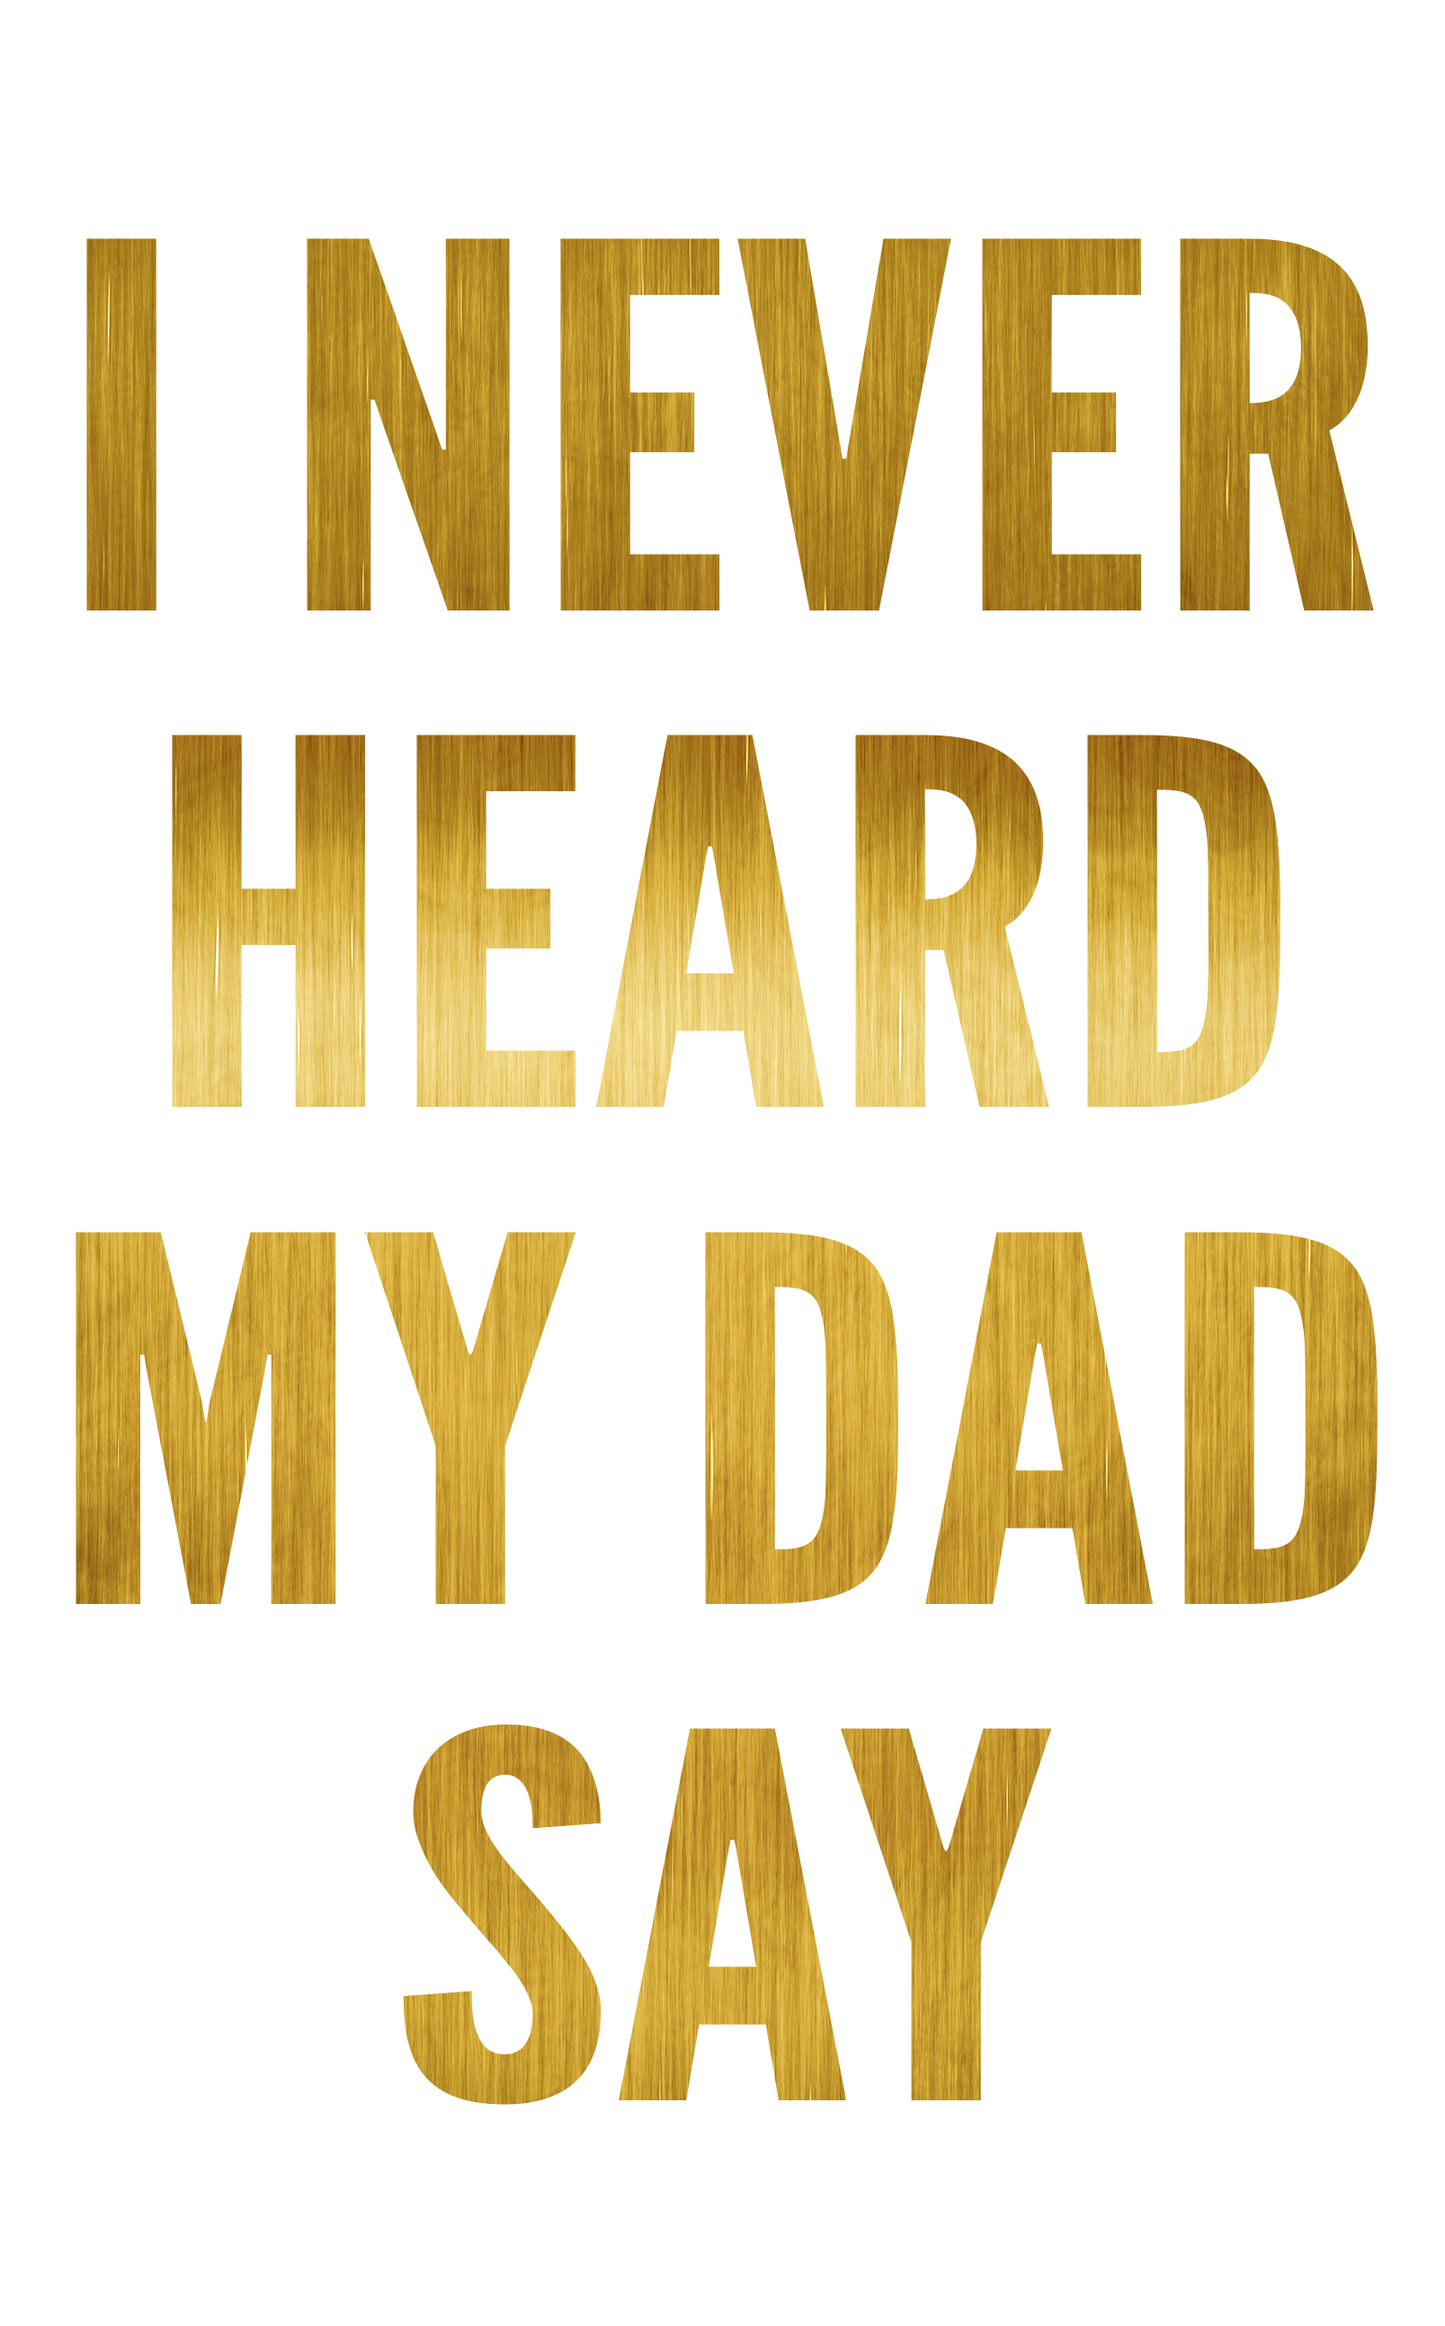 Book - "I Never Heard My Dad Say"